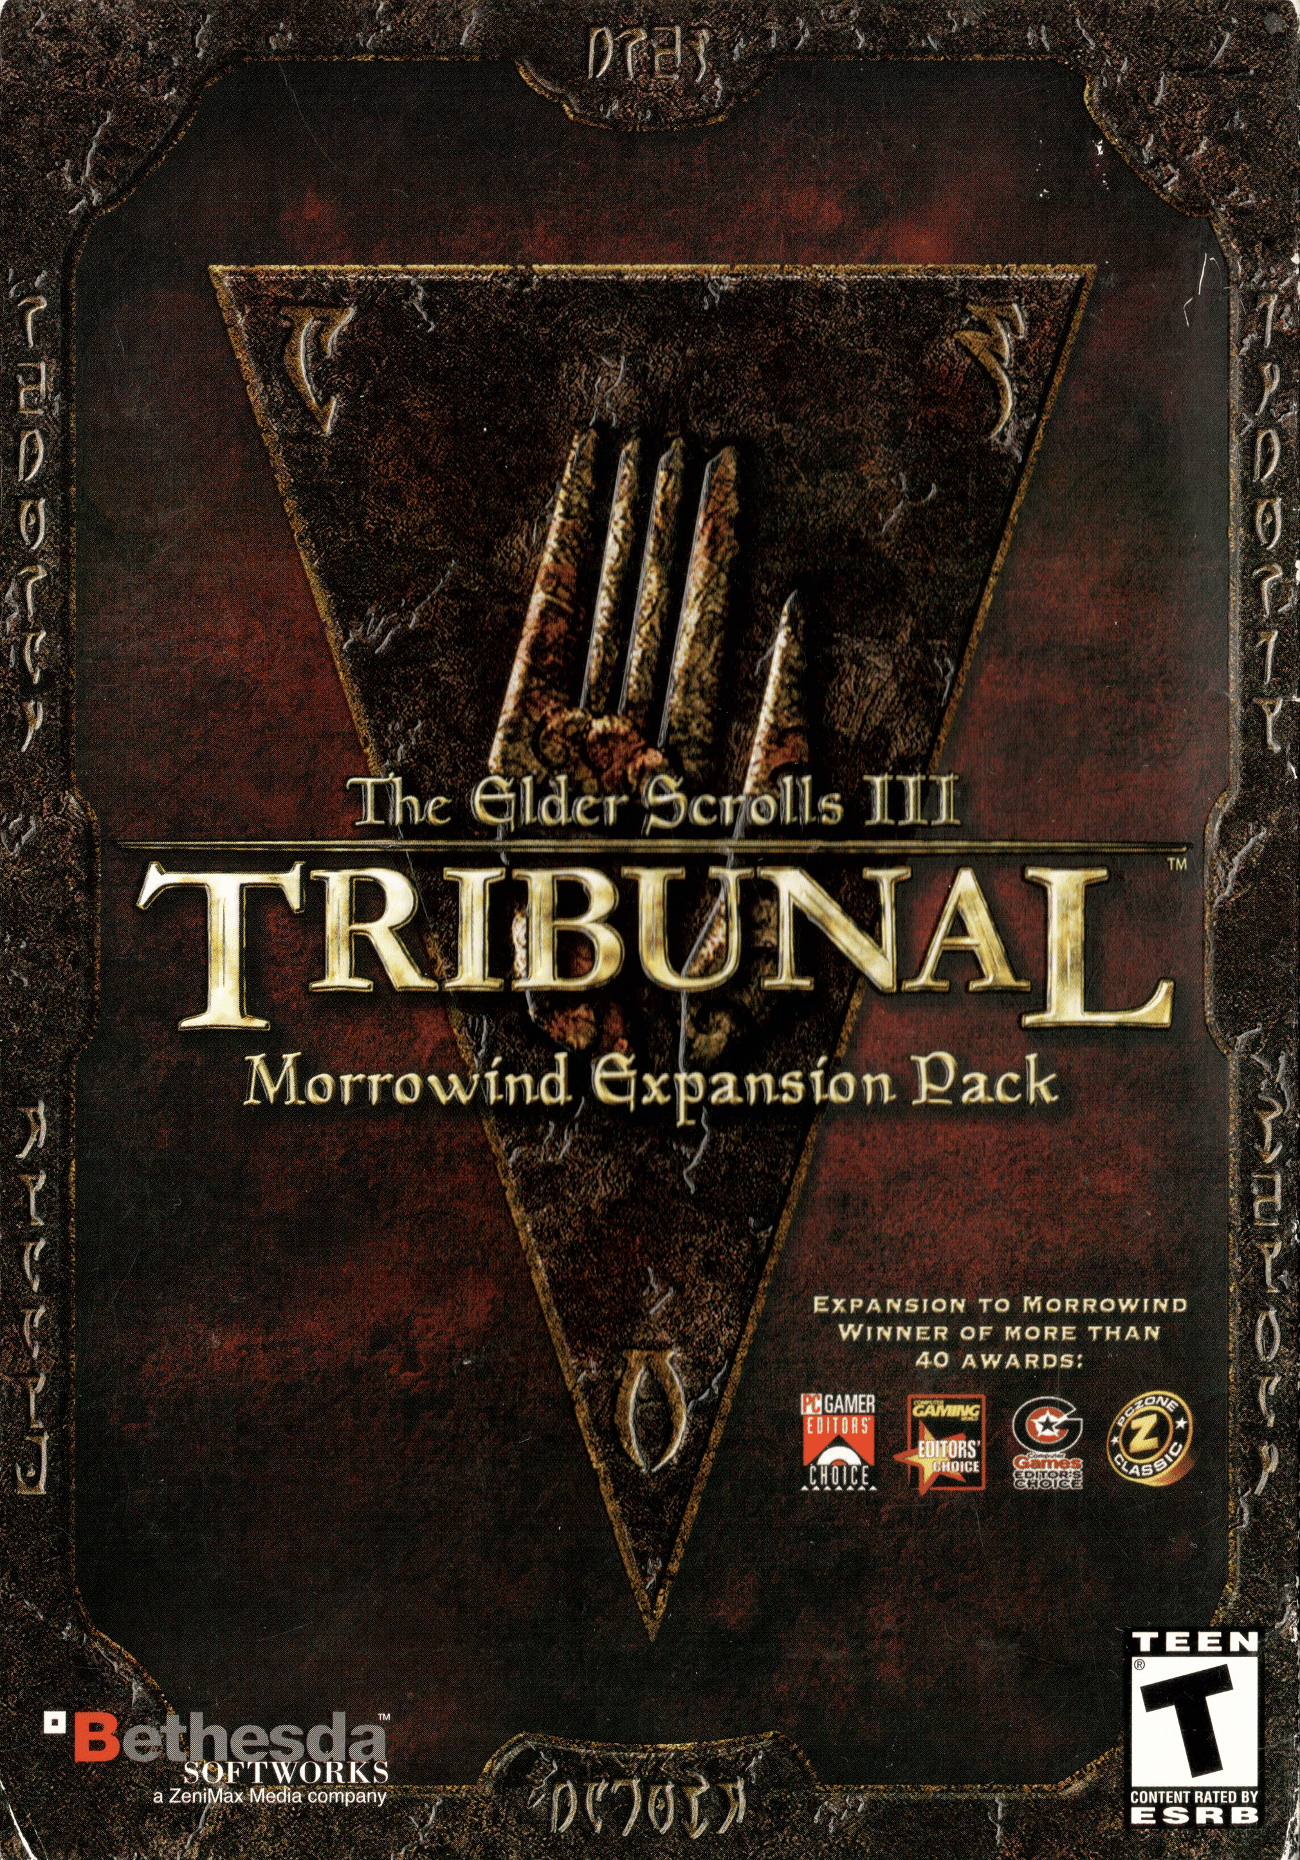 The Elder Scrolls III: Tribunal player count stats